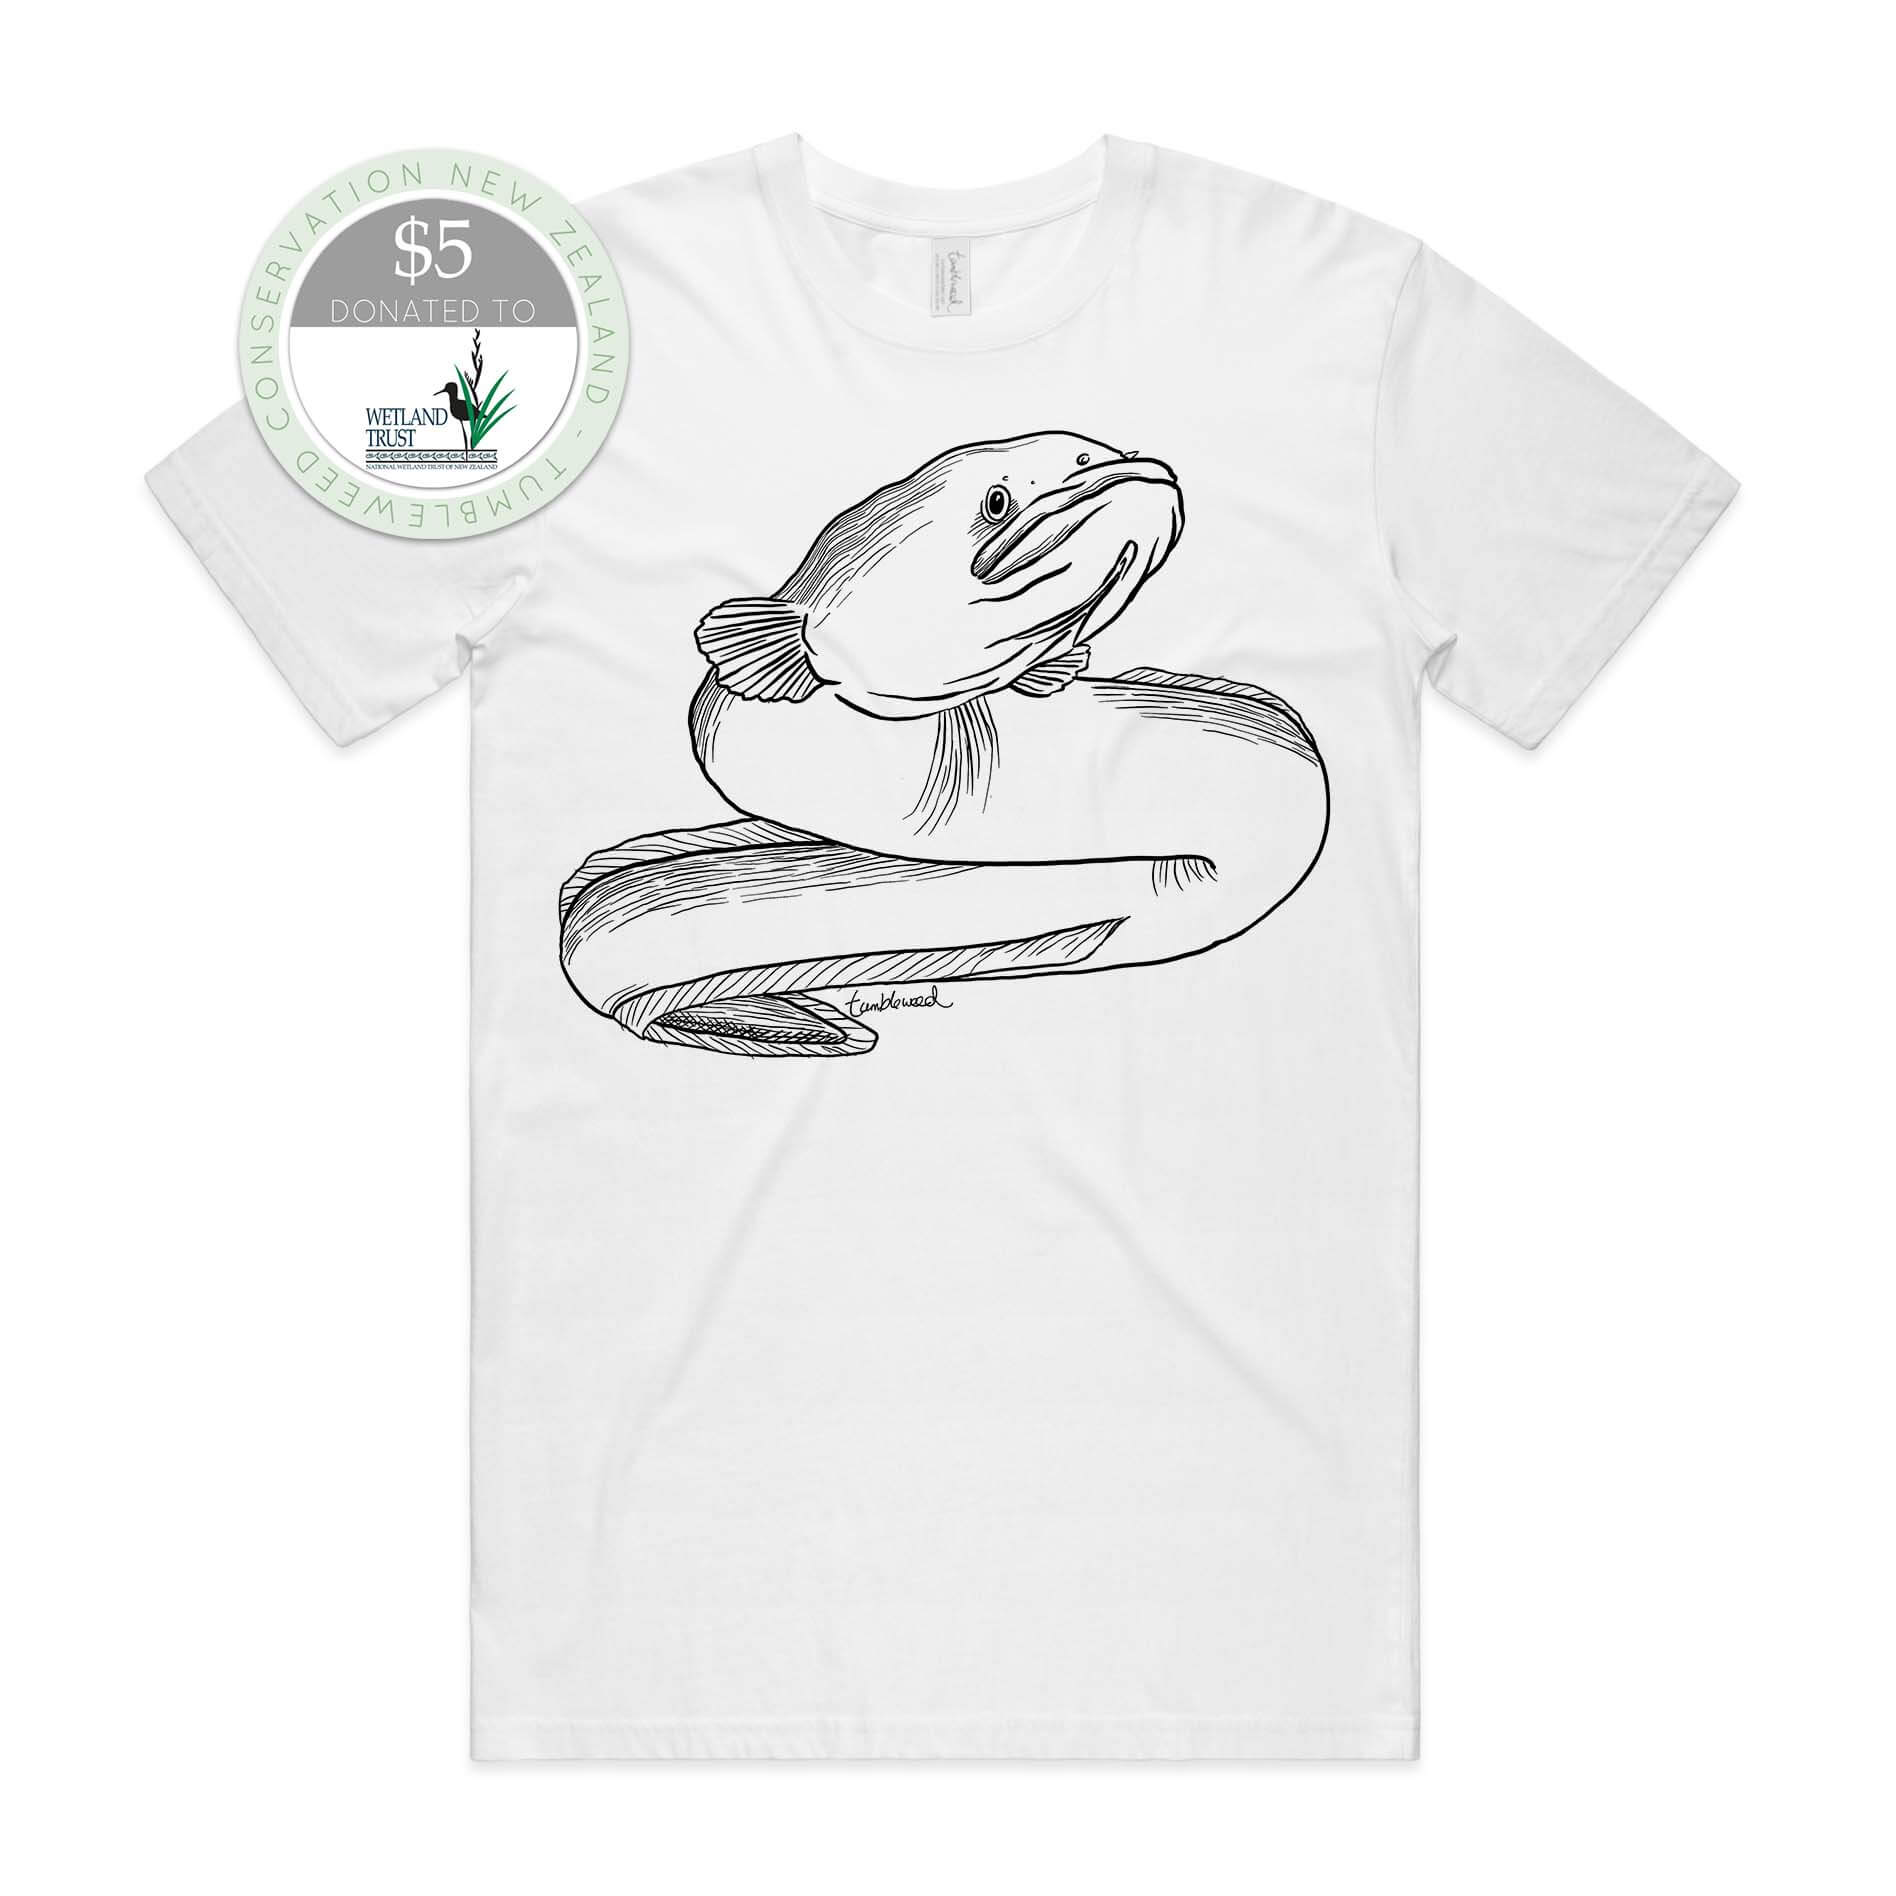 Grey marle, female t-shirt featuring a screen printed Longfin Eel/Tuna design.